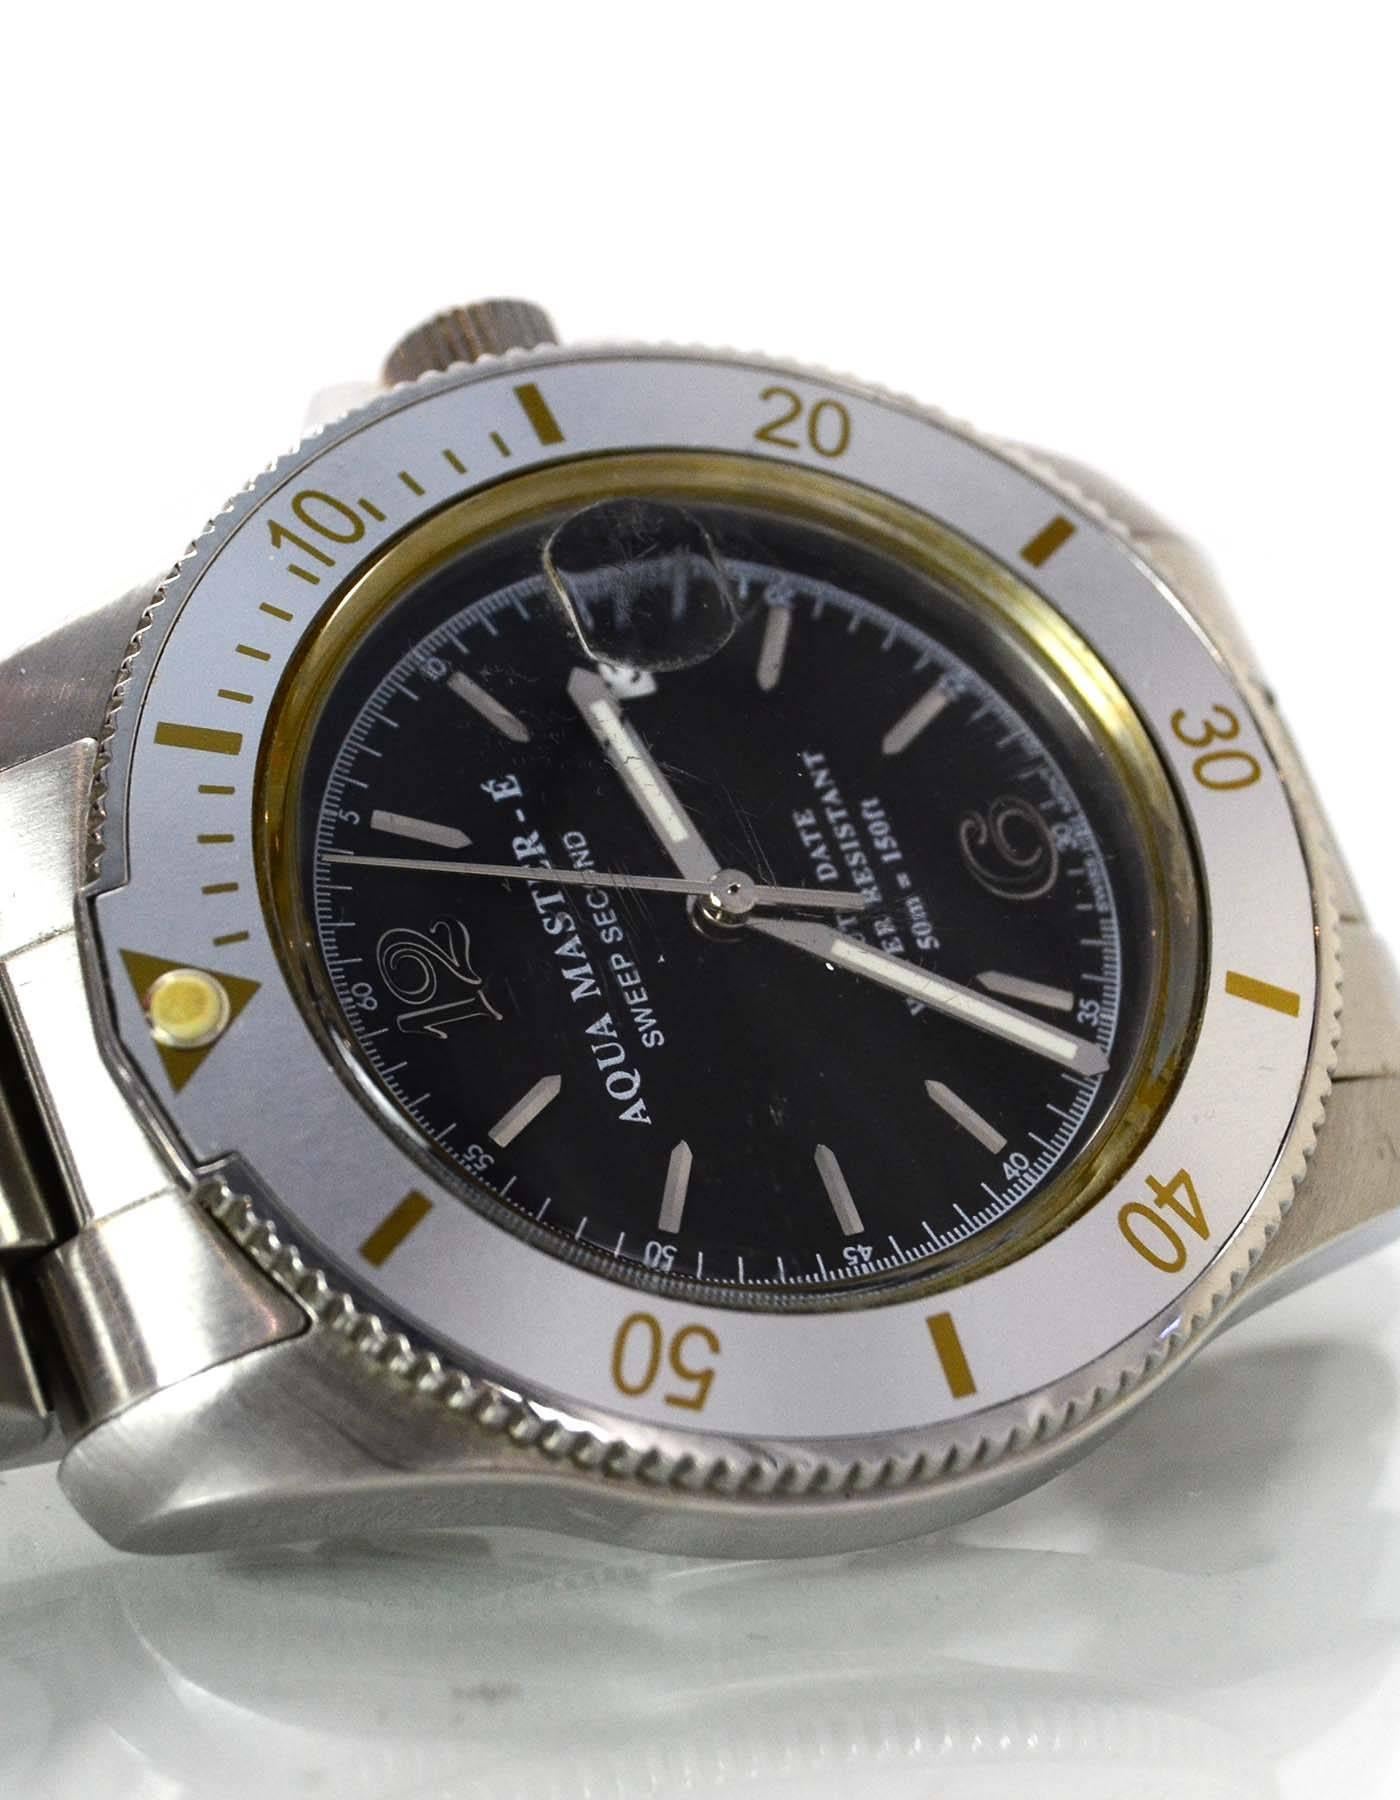 aqua master stainless steel watch